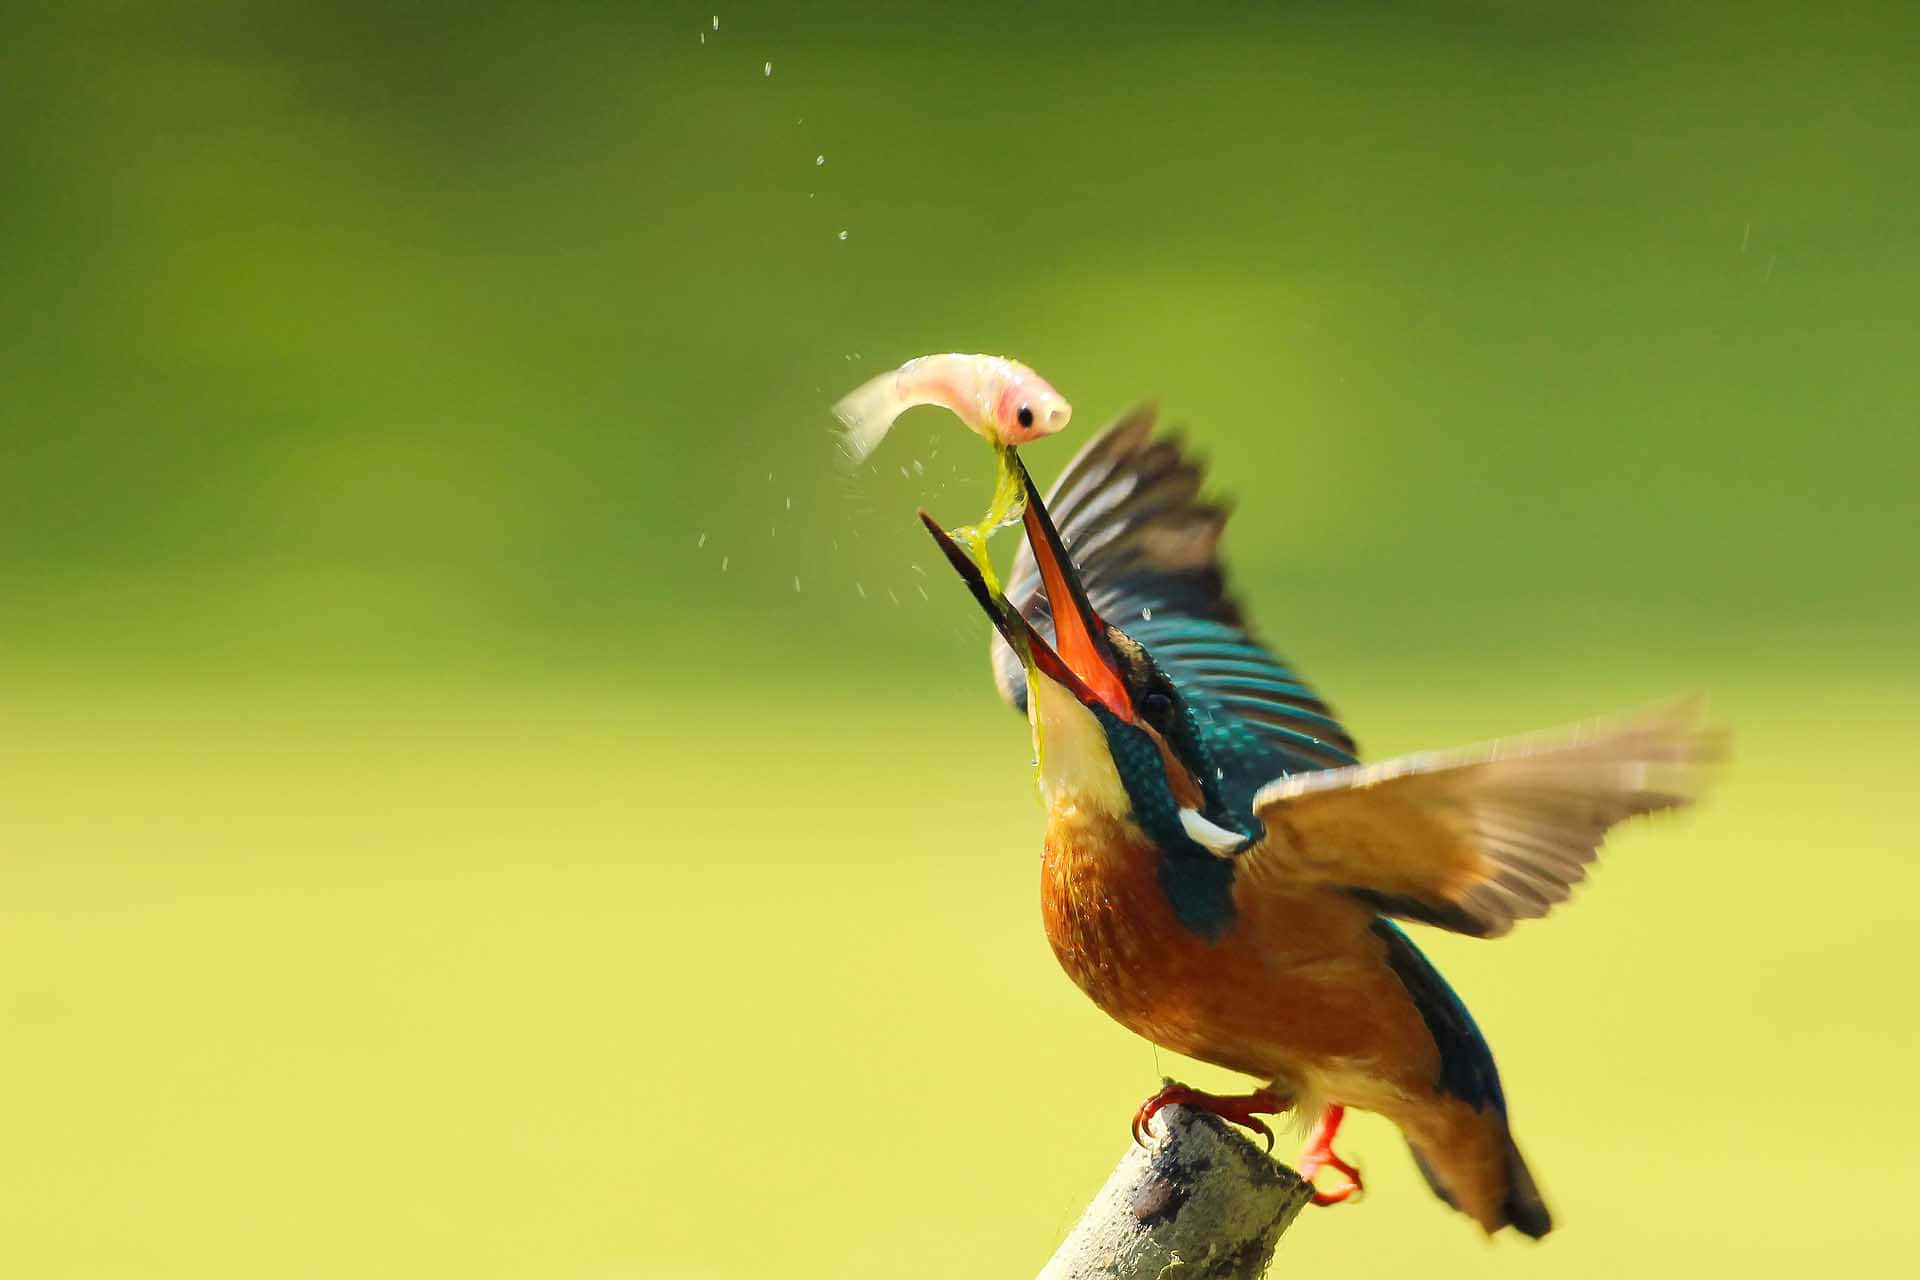 Kingfisher Catching Fish Mid Flight Wallpaper